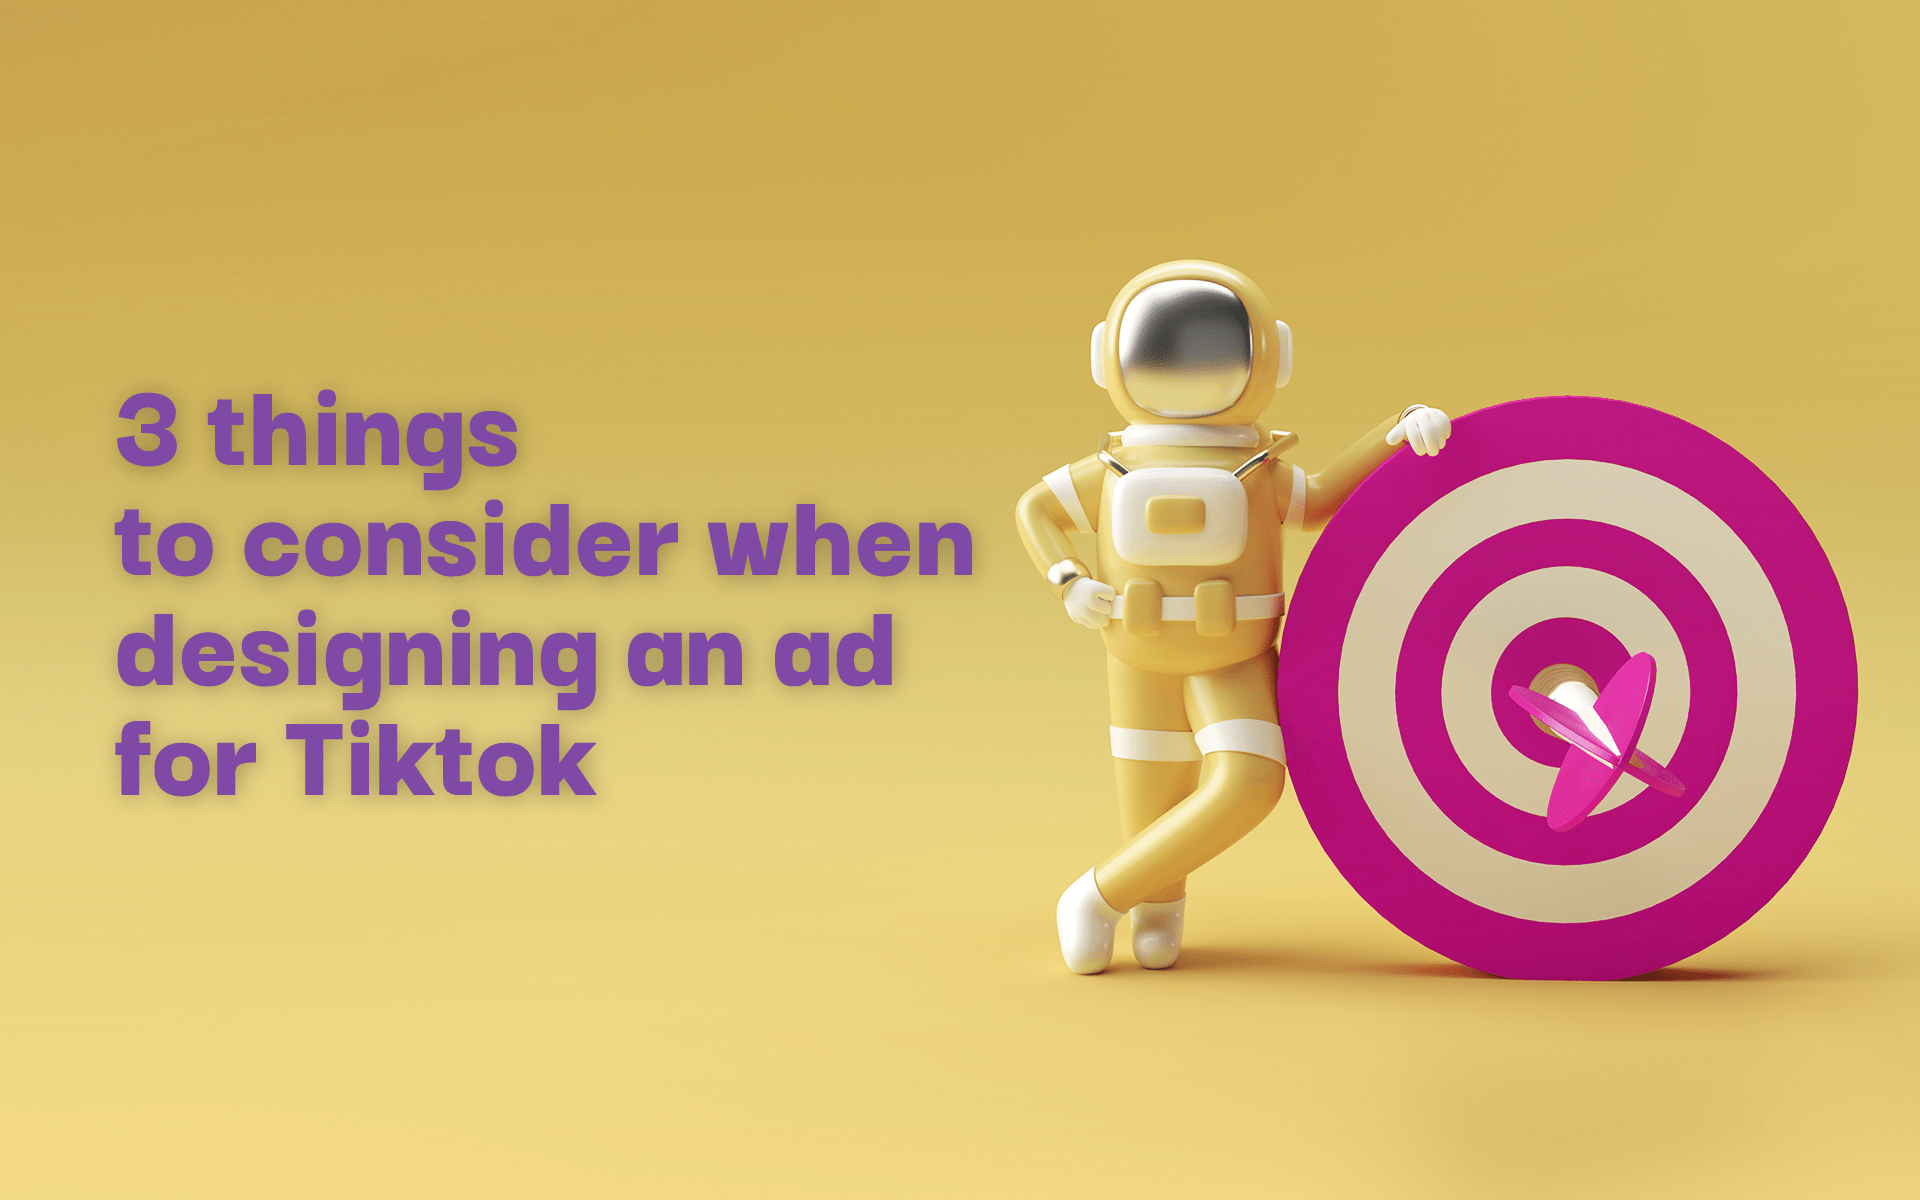 Designing an ad for Tiktok